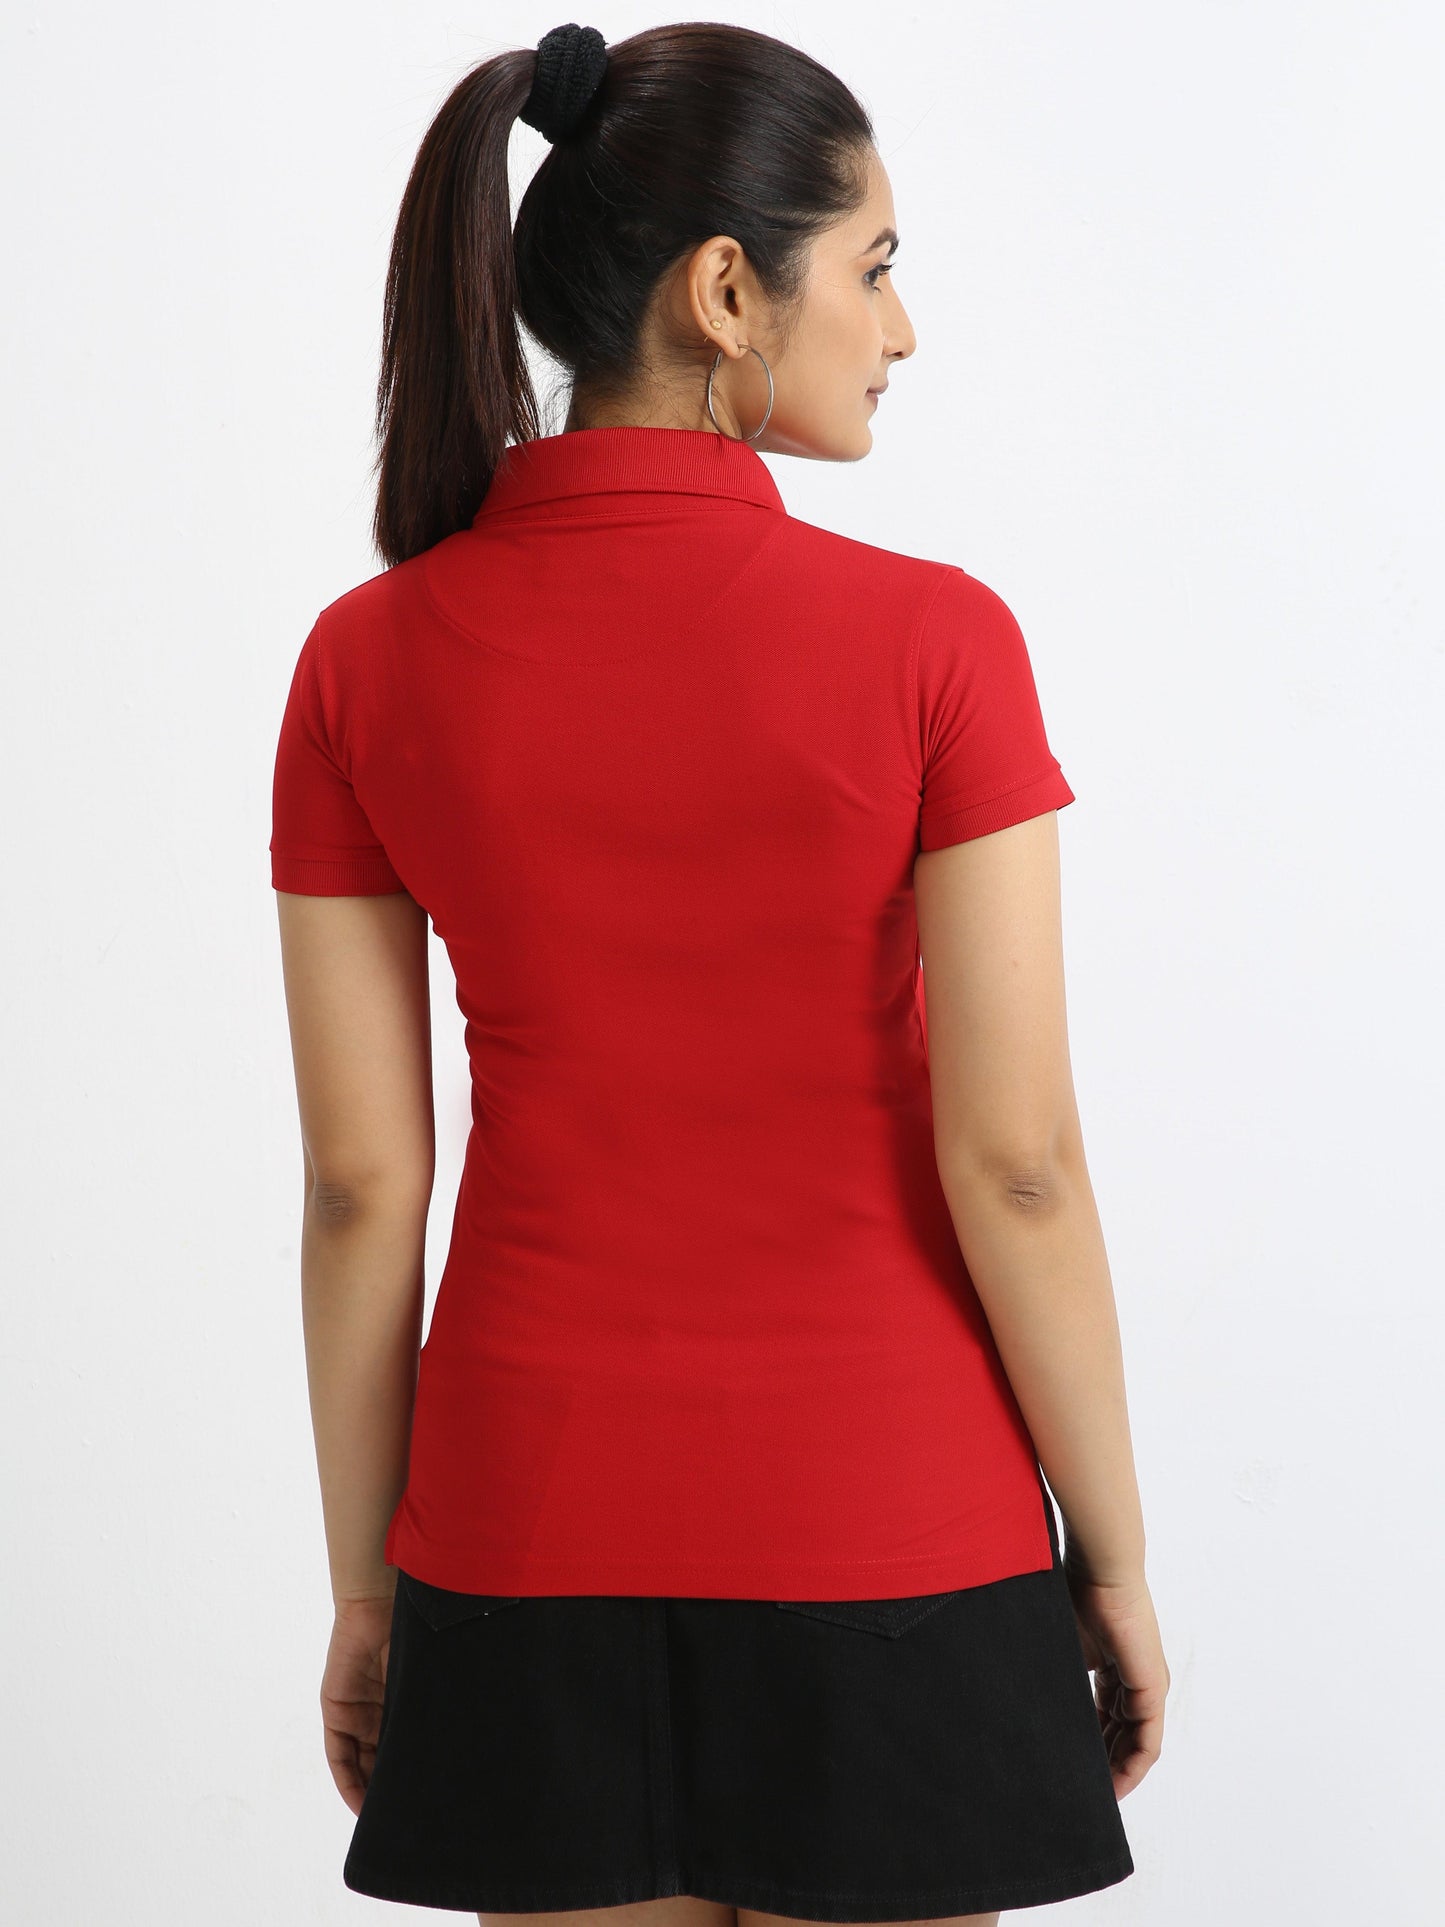 Arrow Red Women's Polo T-shirt